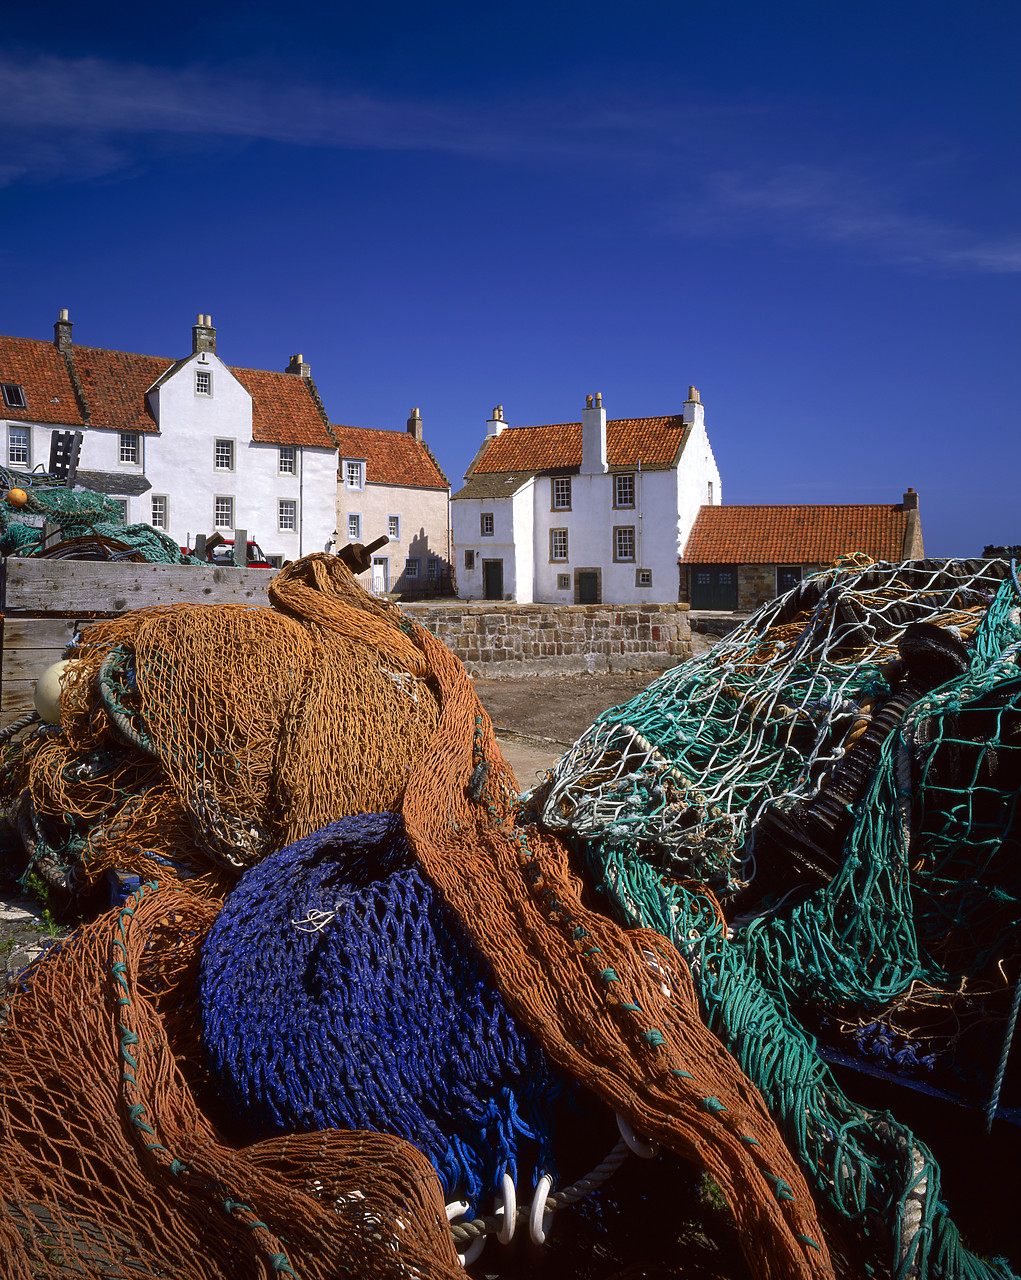 #970383-5 - Fishing Nets & Cottages, Pittenweem, Fife, Scotland